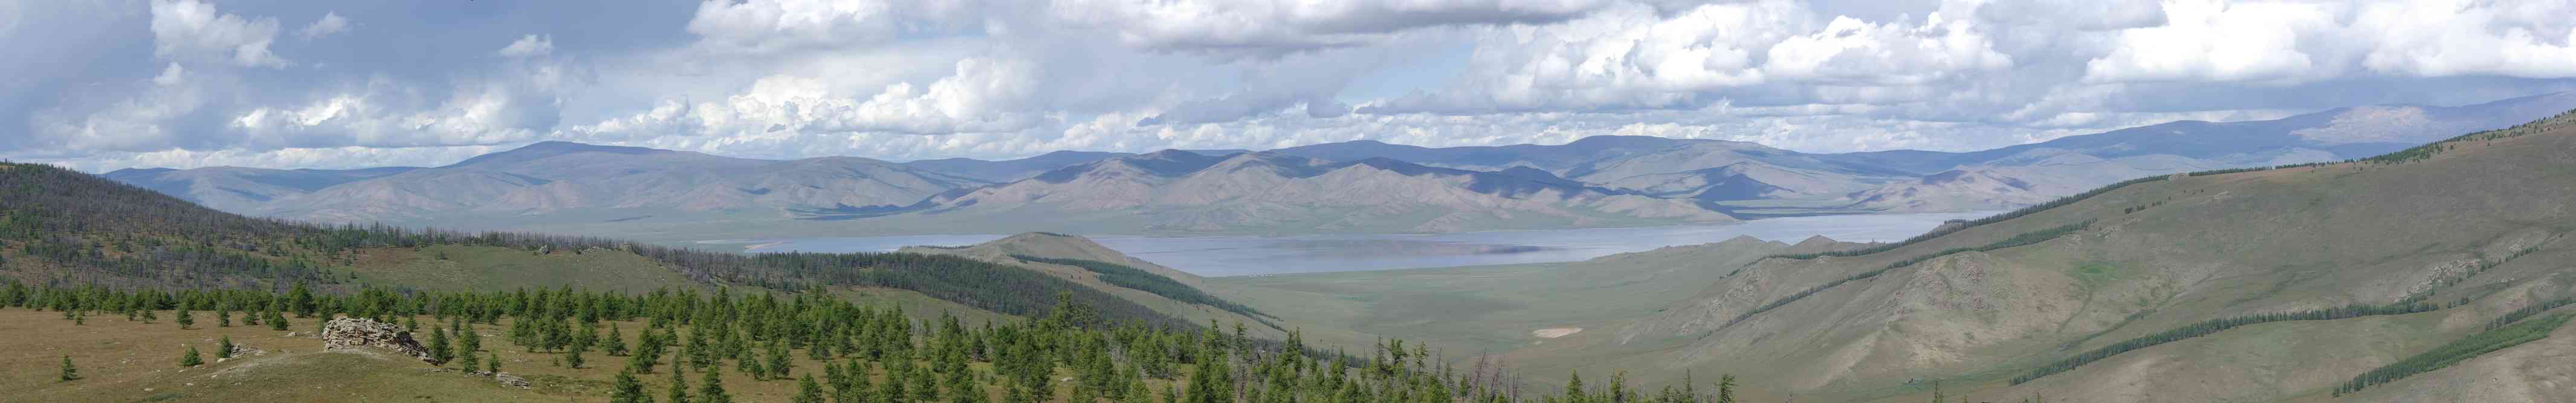 Arrivée vers le lac blanc (Terkhiin Tsagaan nuur (Тэрхийн Цагаан нуур)), le 17 août 2013